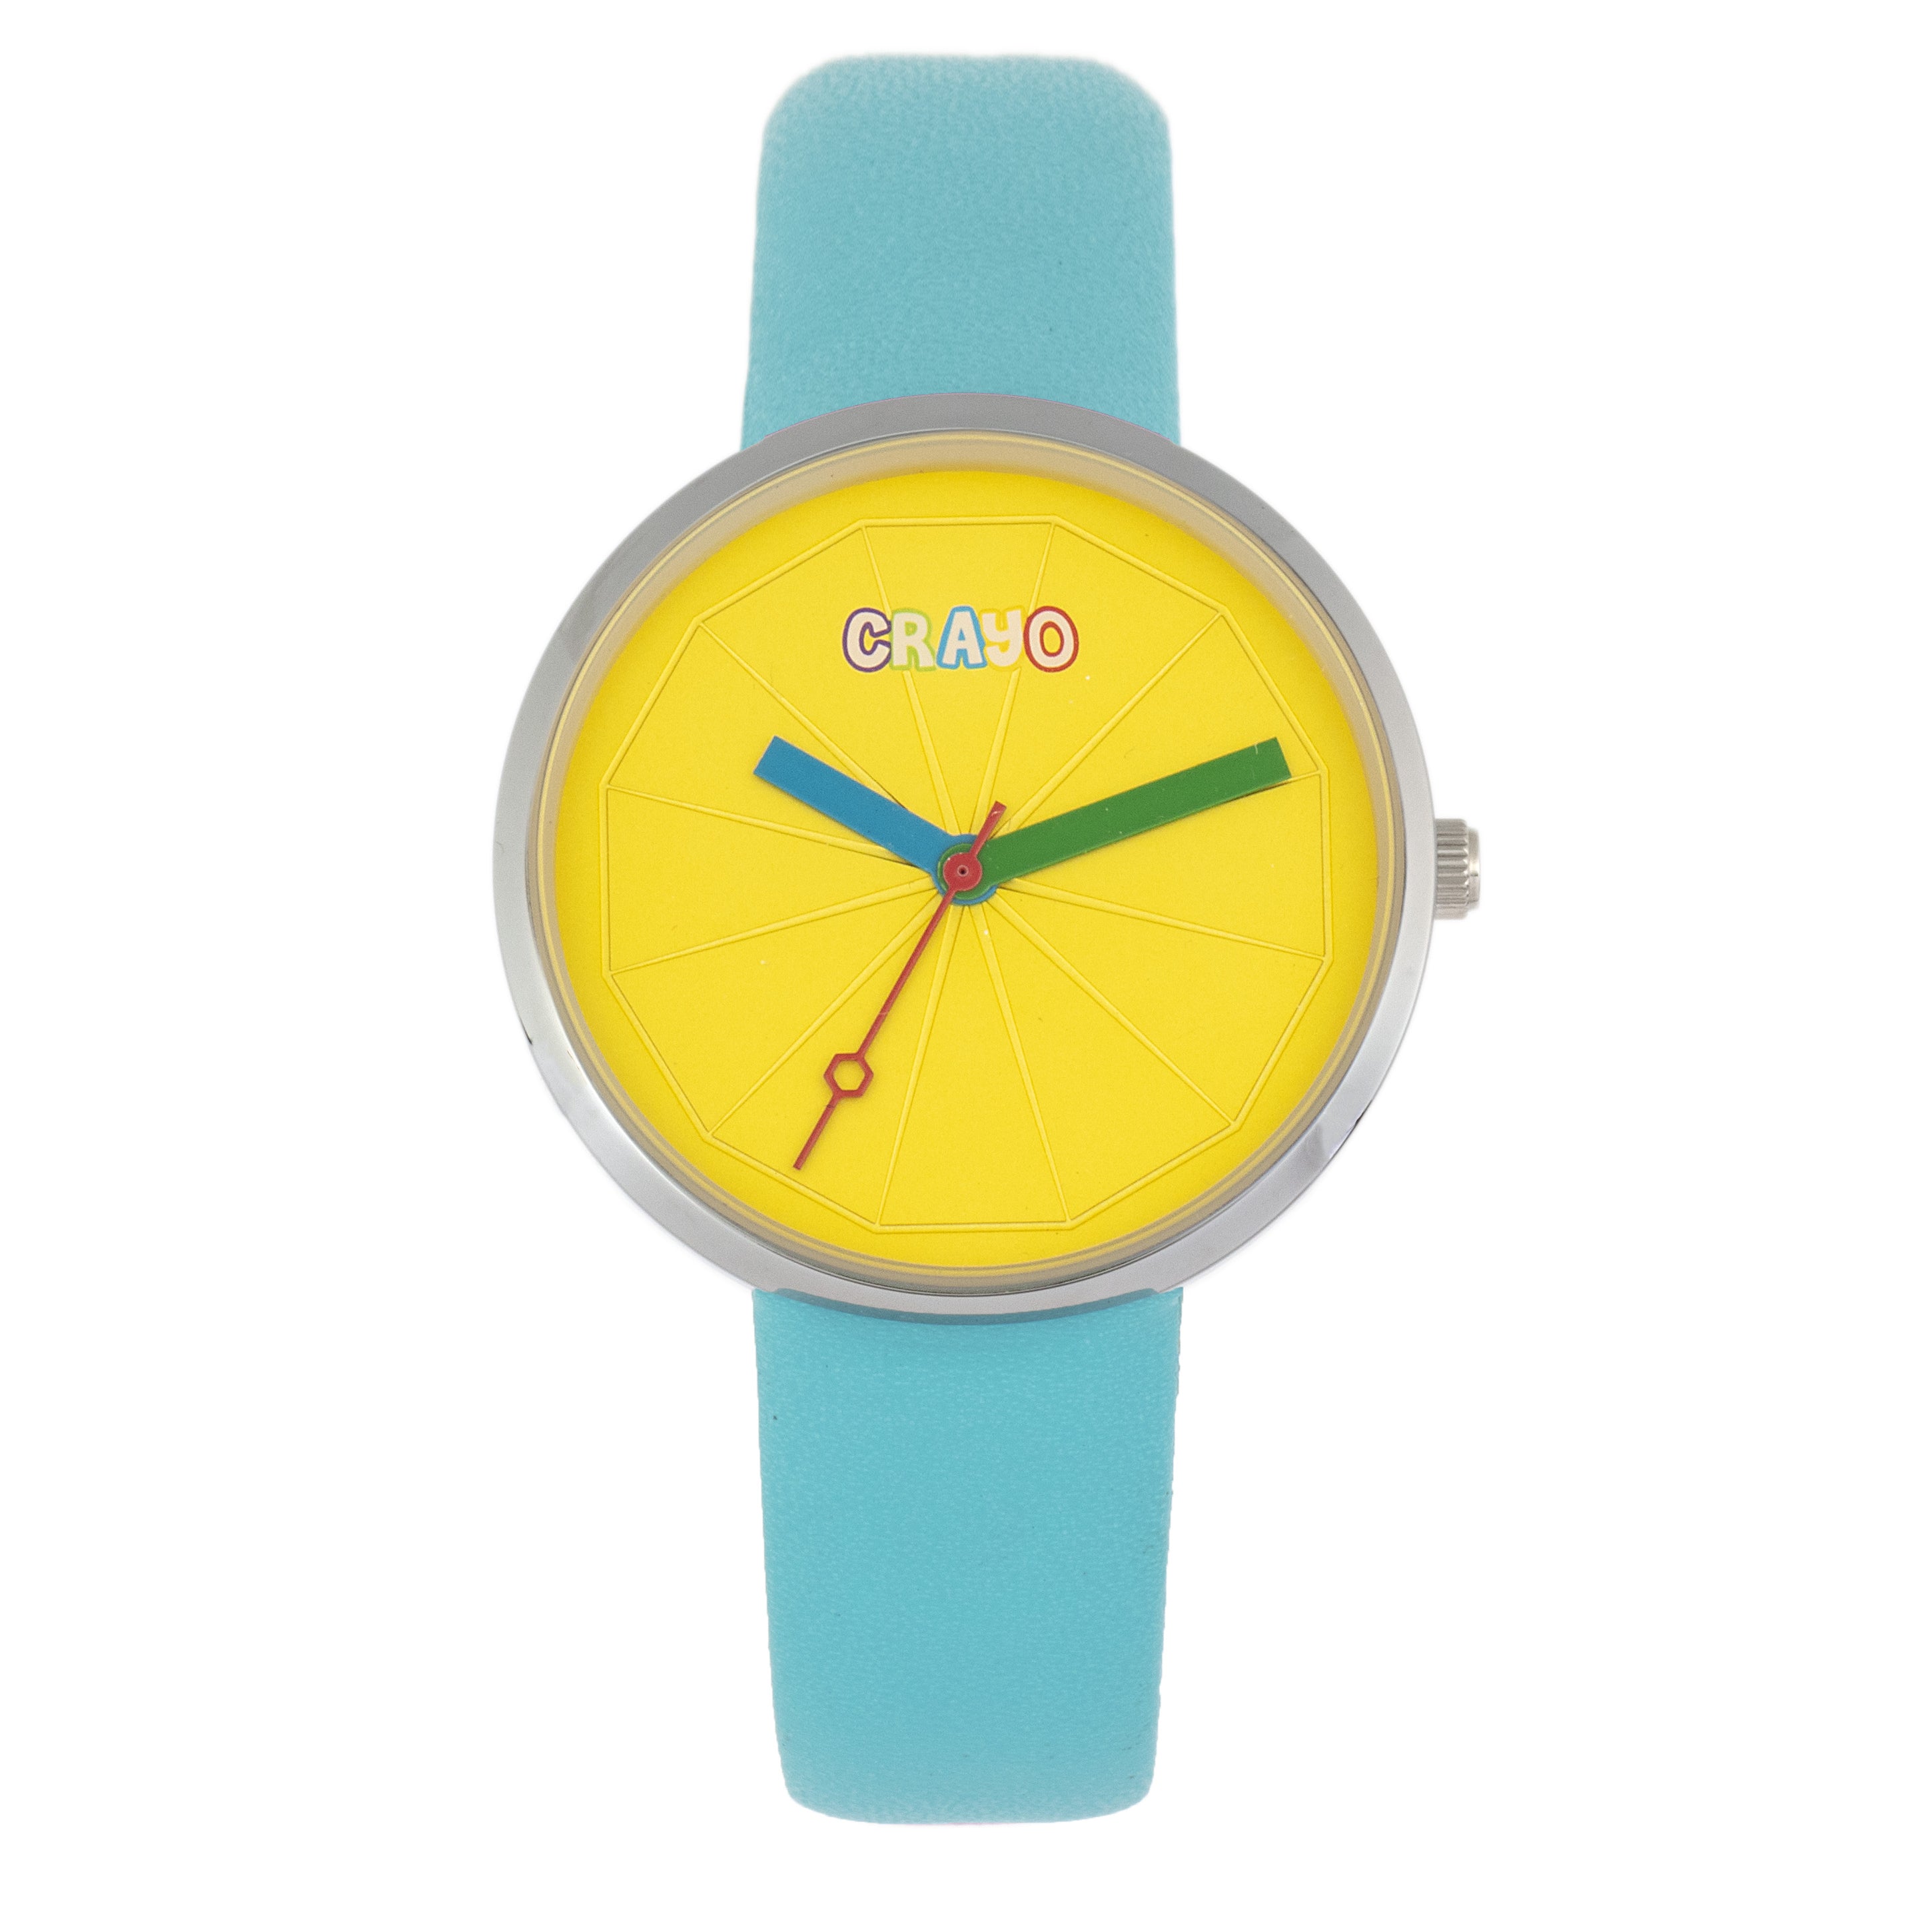 Crayo Metric Unisex Watch - Turquoise  - CRACR5806